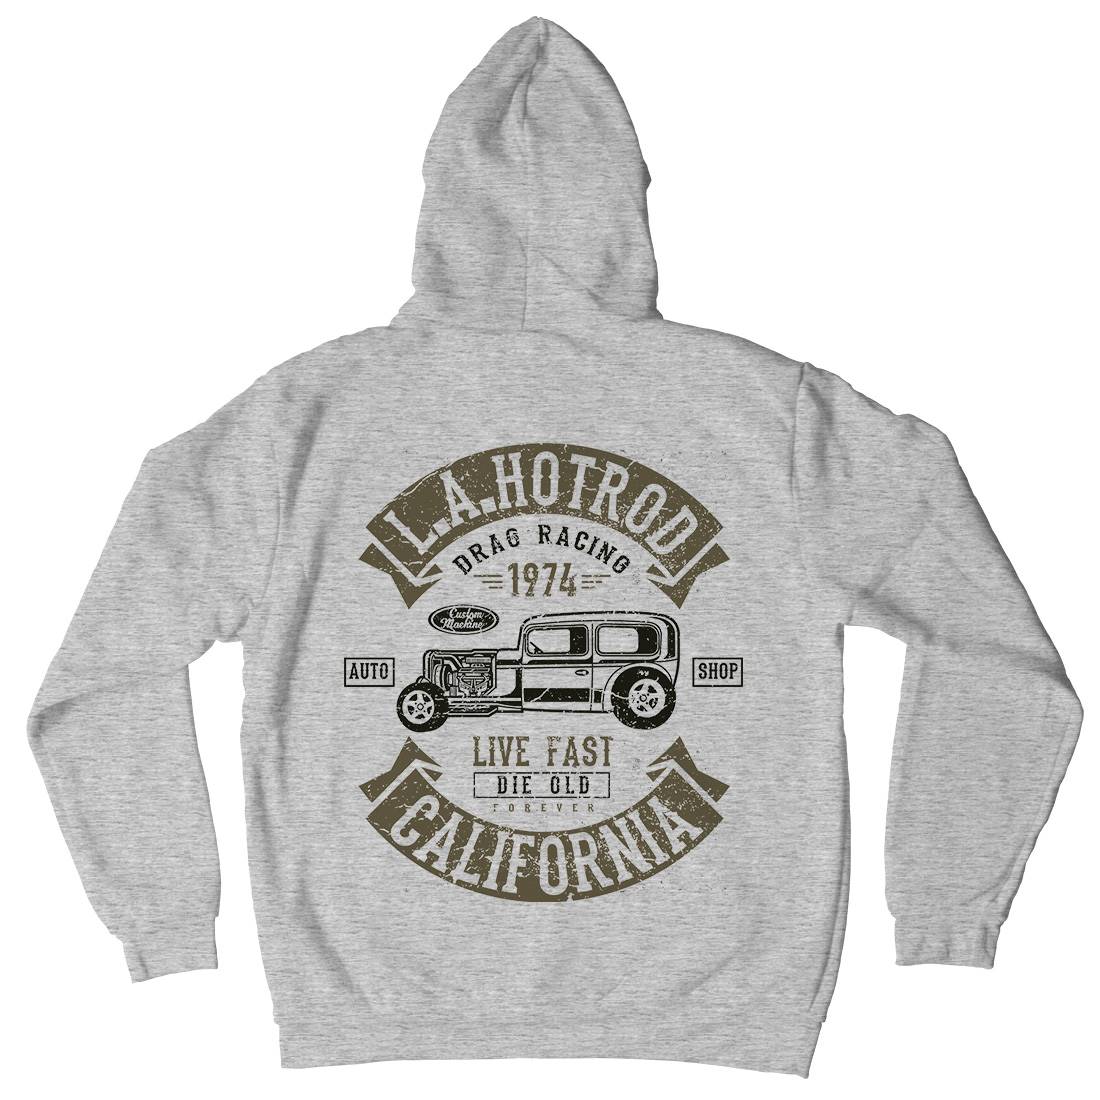 La Hotrod Mens Hoodie With Pocket Cars A080